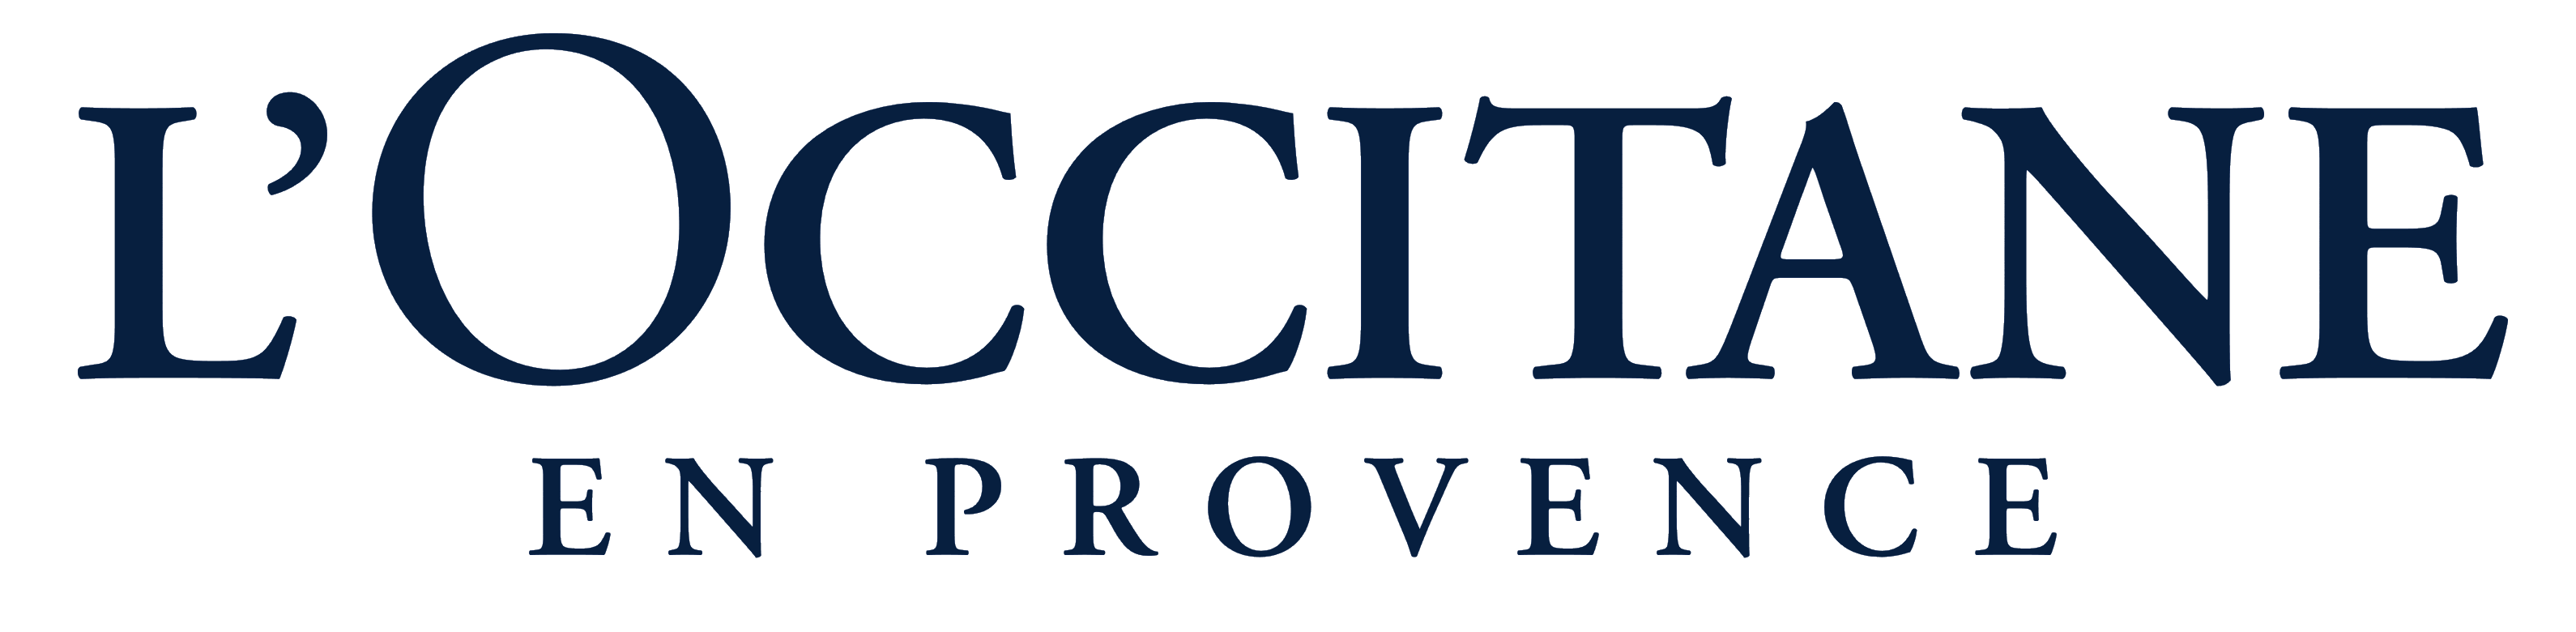 L'Occitane en Provence logo, logotype